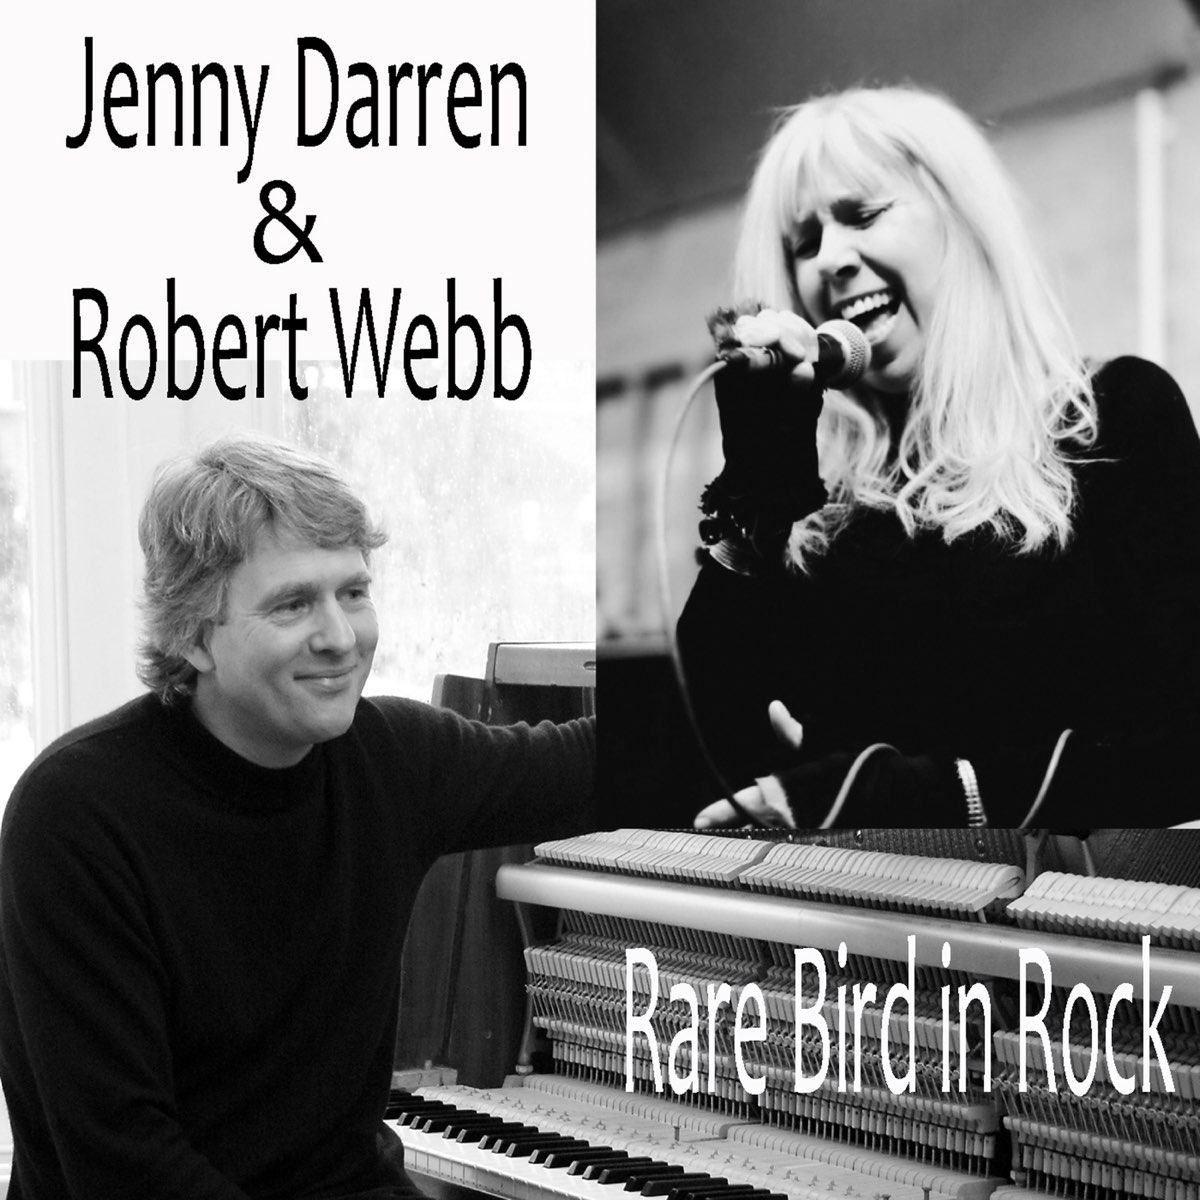 Rare Bird in Rock - Album by Robert Webb u0026 Jenny Darren - Apple Music